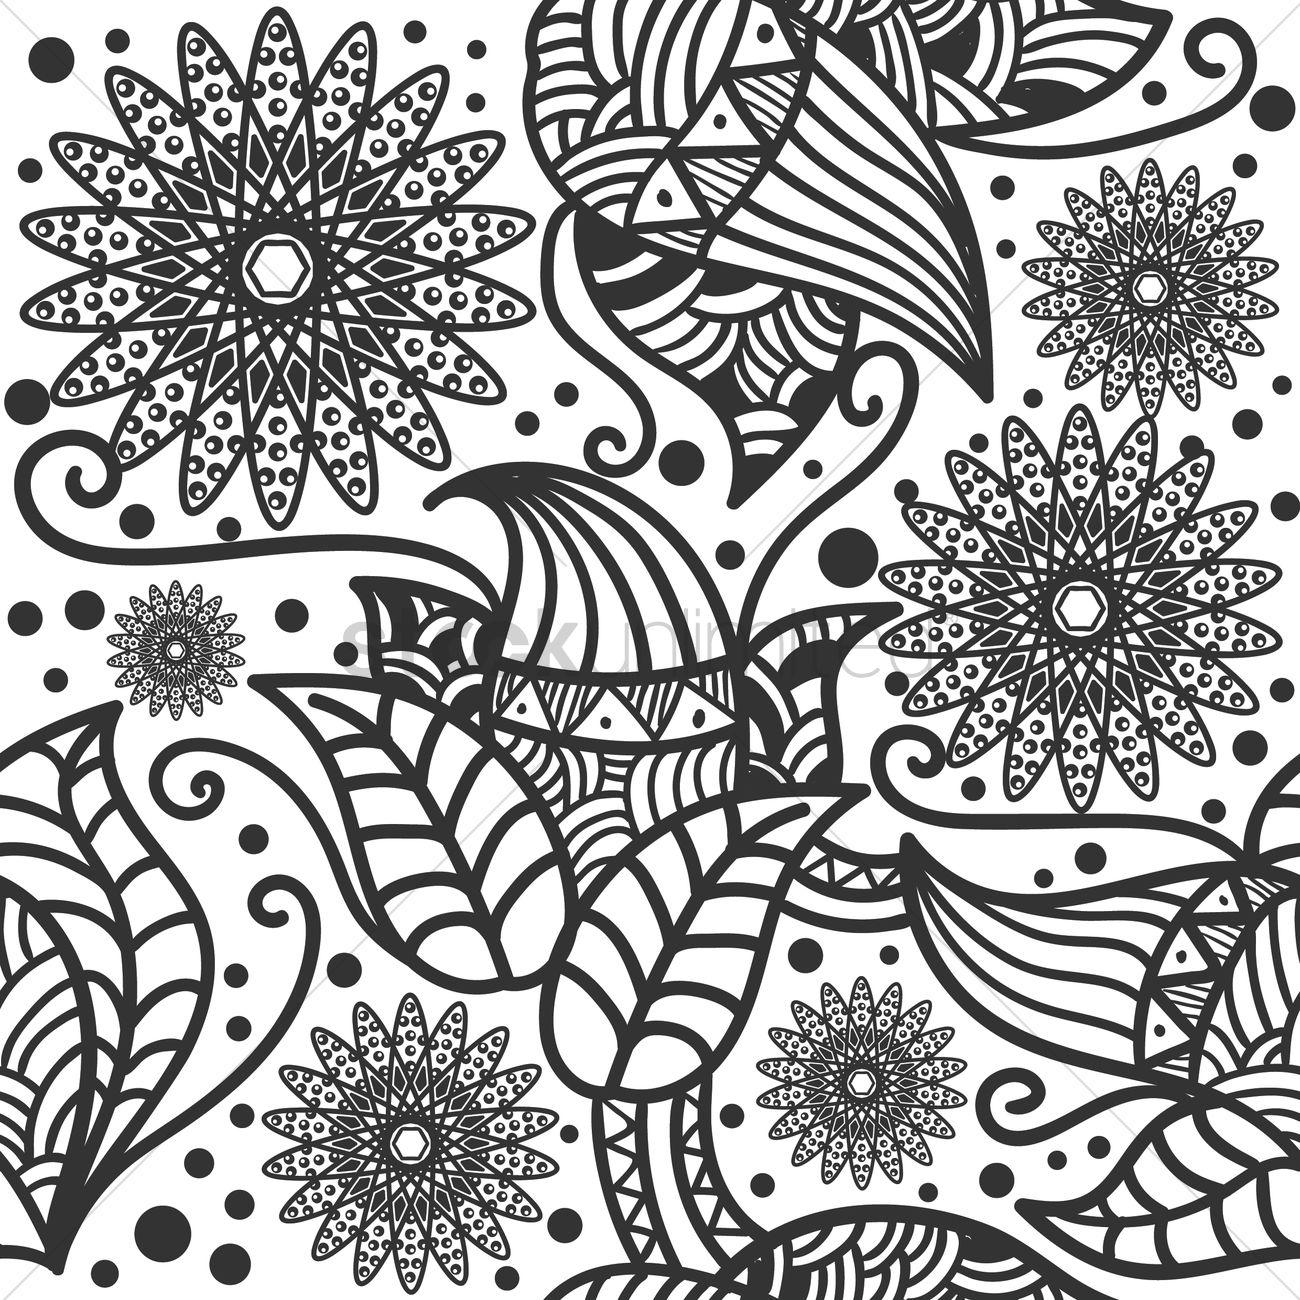 Flower Sketch Wallpaper. Explore